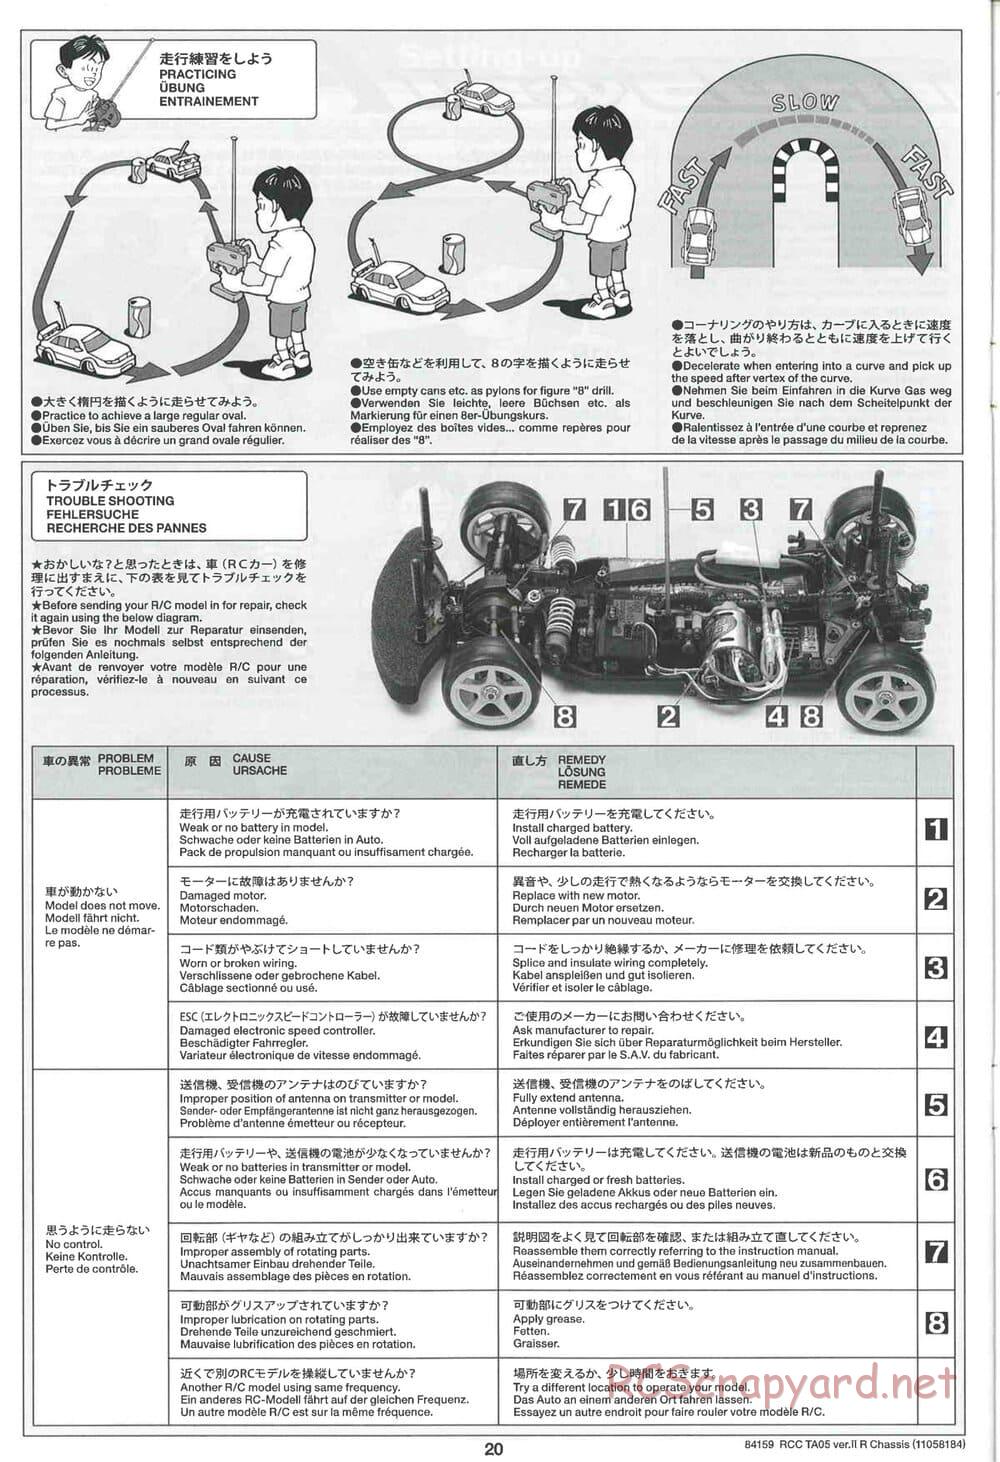 Tamiya - TA05 Ver.II R Chassis - Manual - Page 20